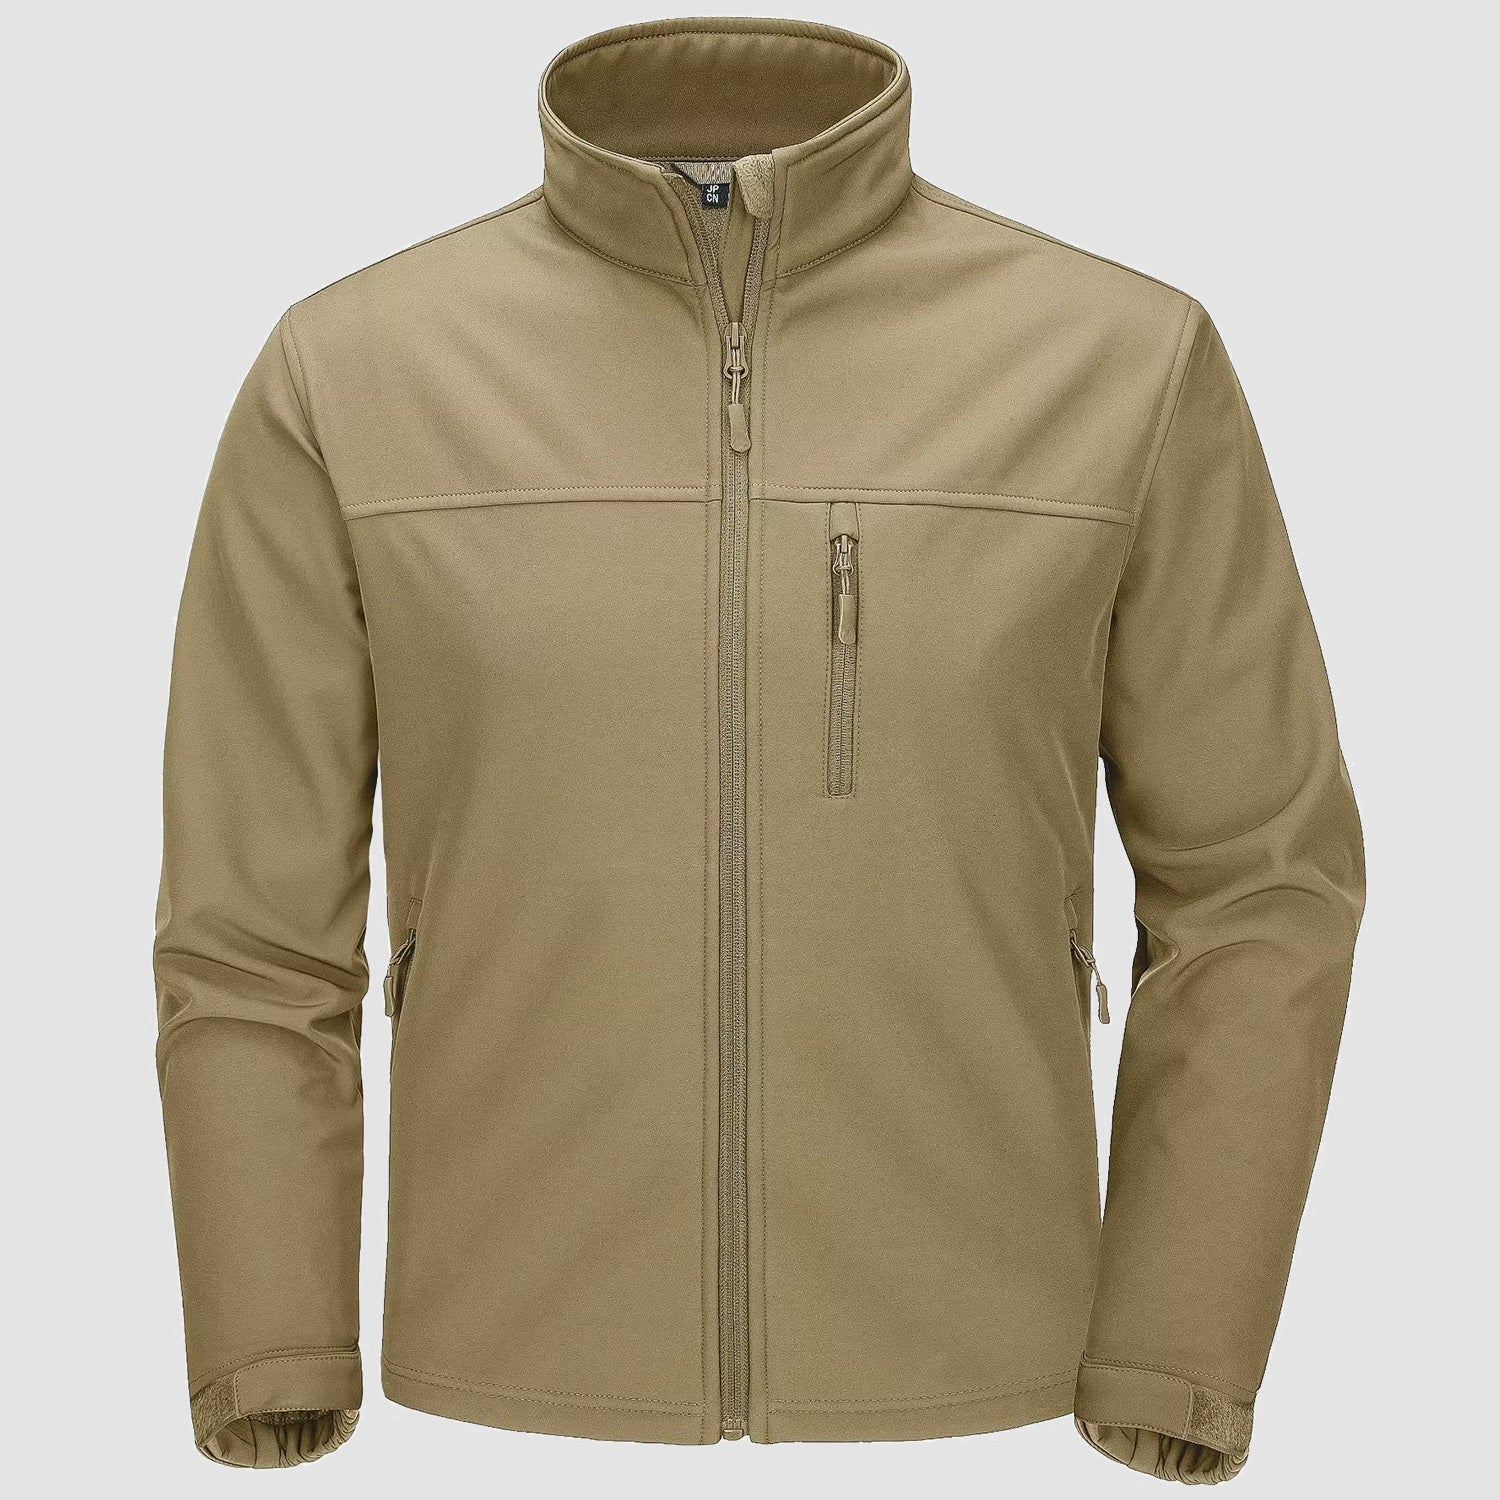 Men's Fleece Lined Jacket Lightweight Waterproof Jacket for Outdoors